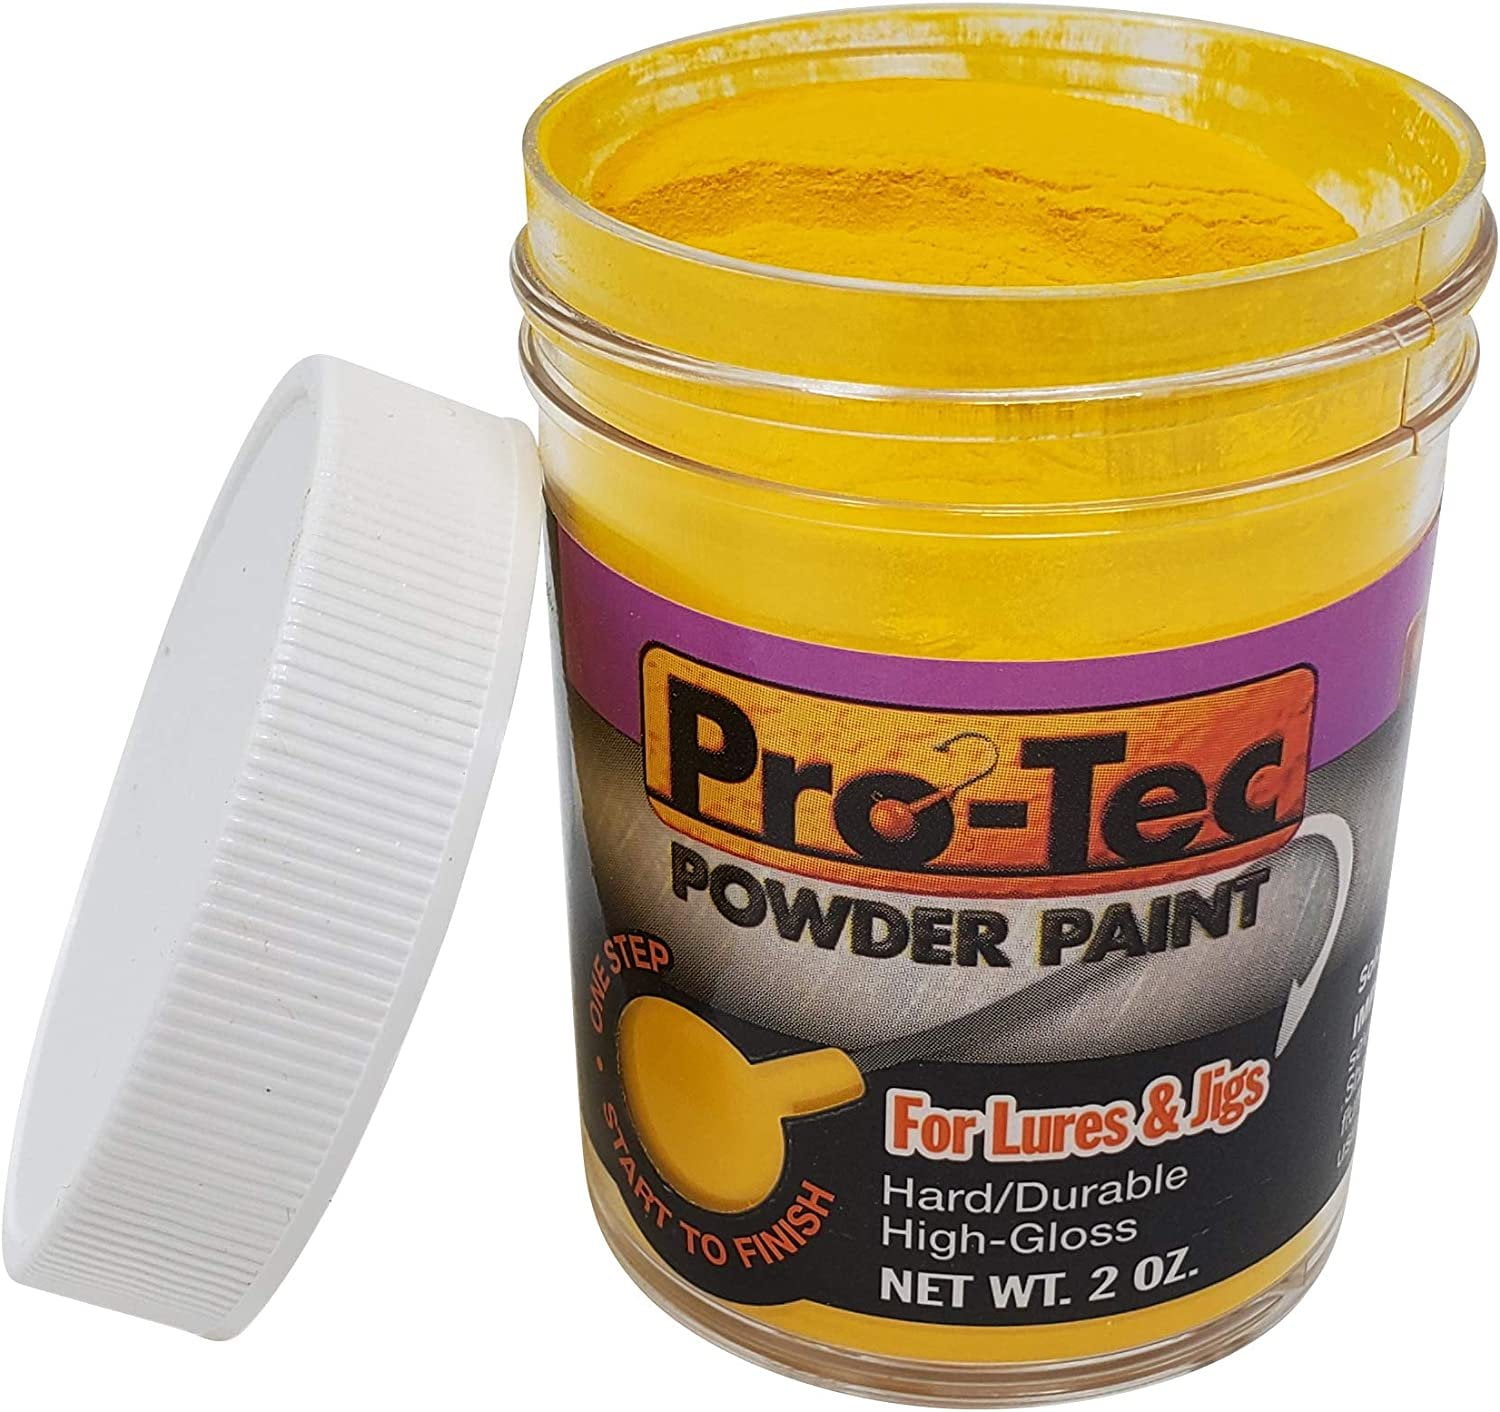 Pro-Tec Powder Paint 2 oz Jars I combine to discount shipping!